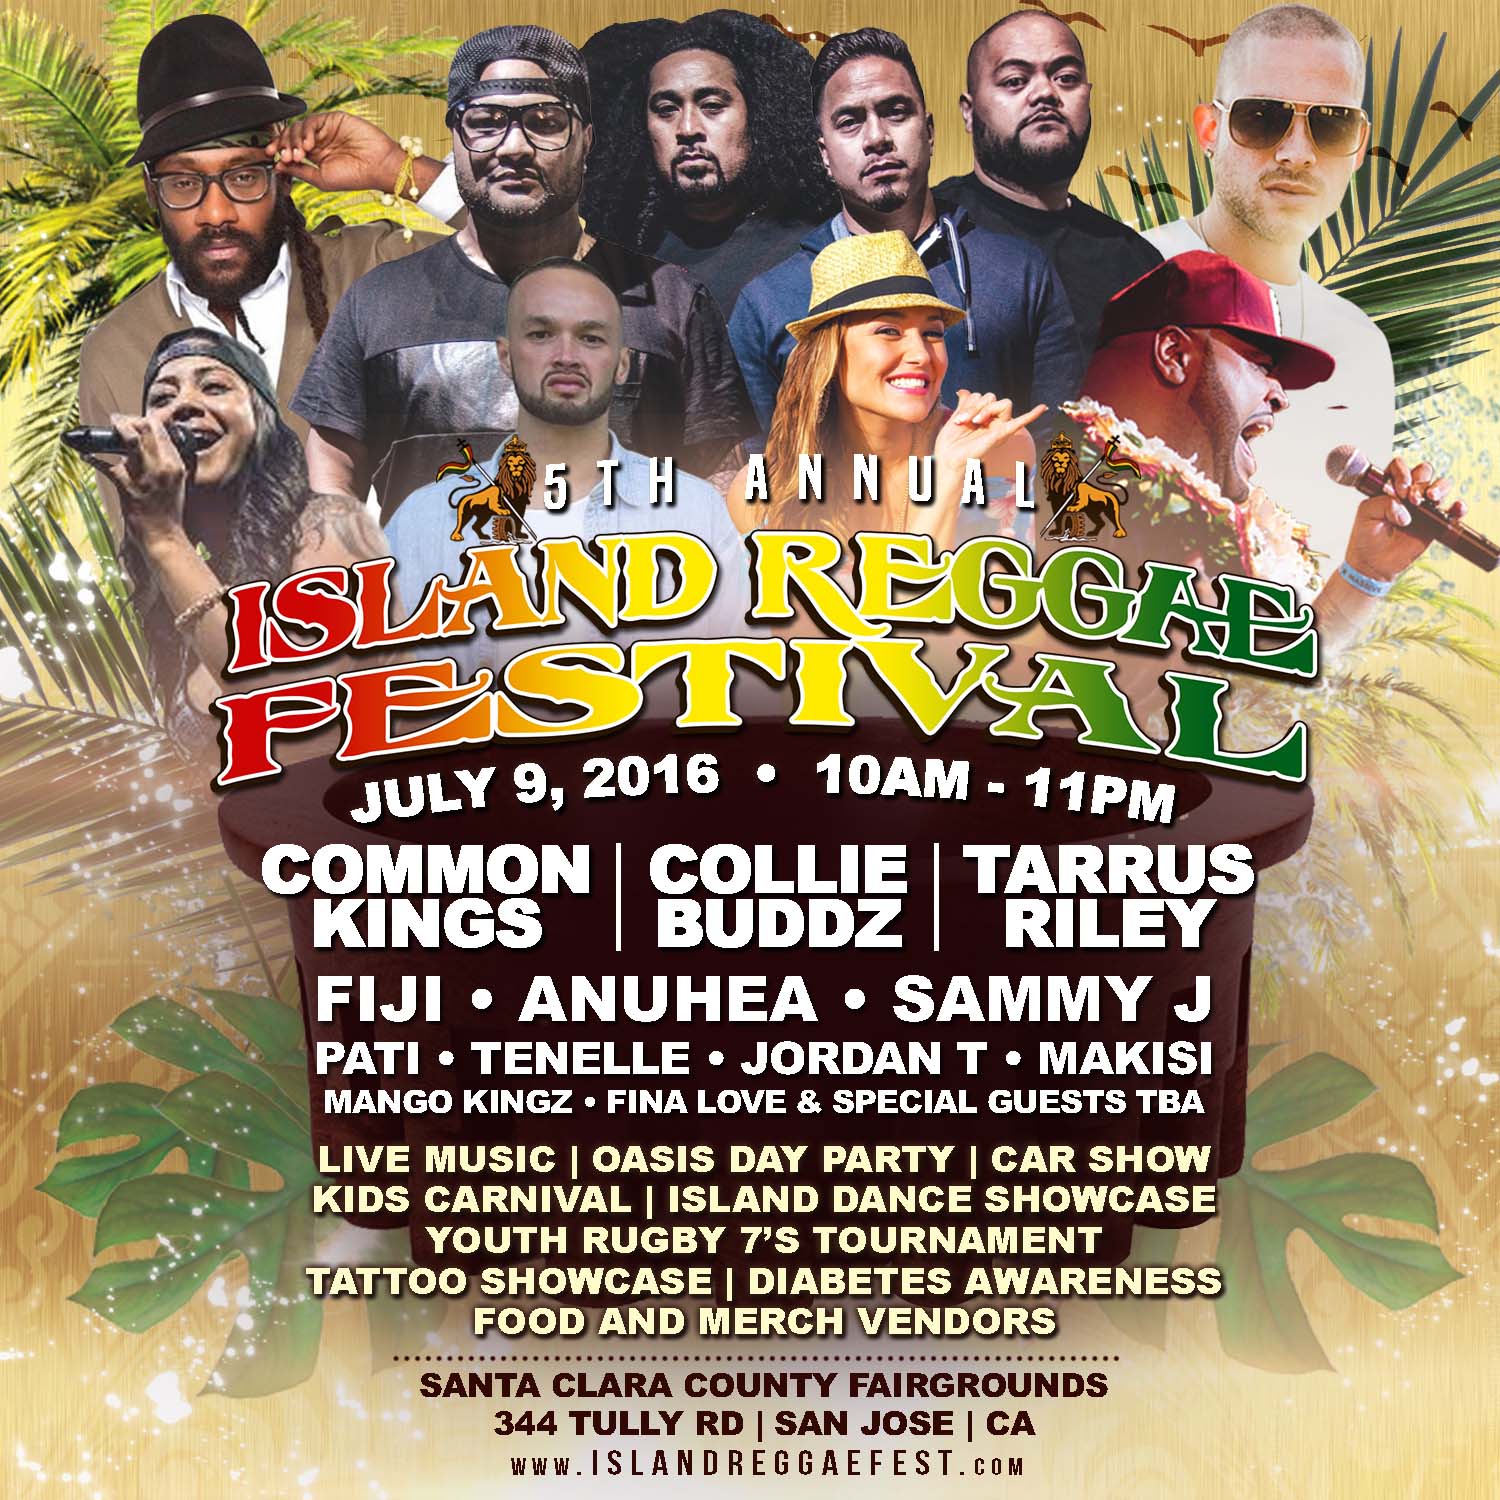 5th Annual Island Reggae Festival 2016 Tickets, Sat, Jul 9, 2016 at 10